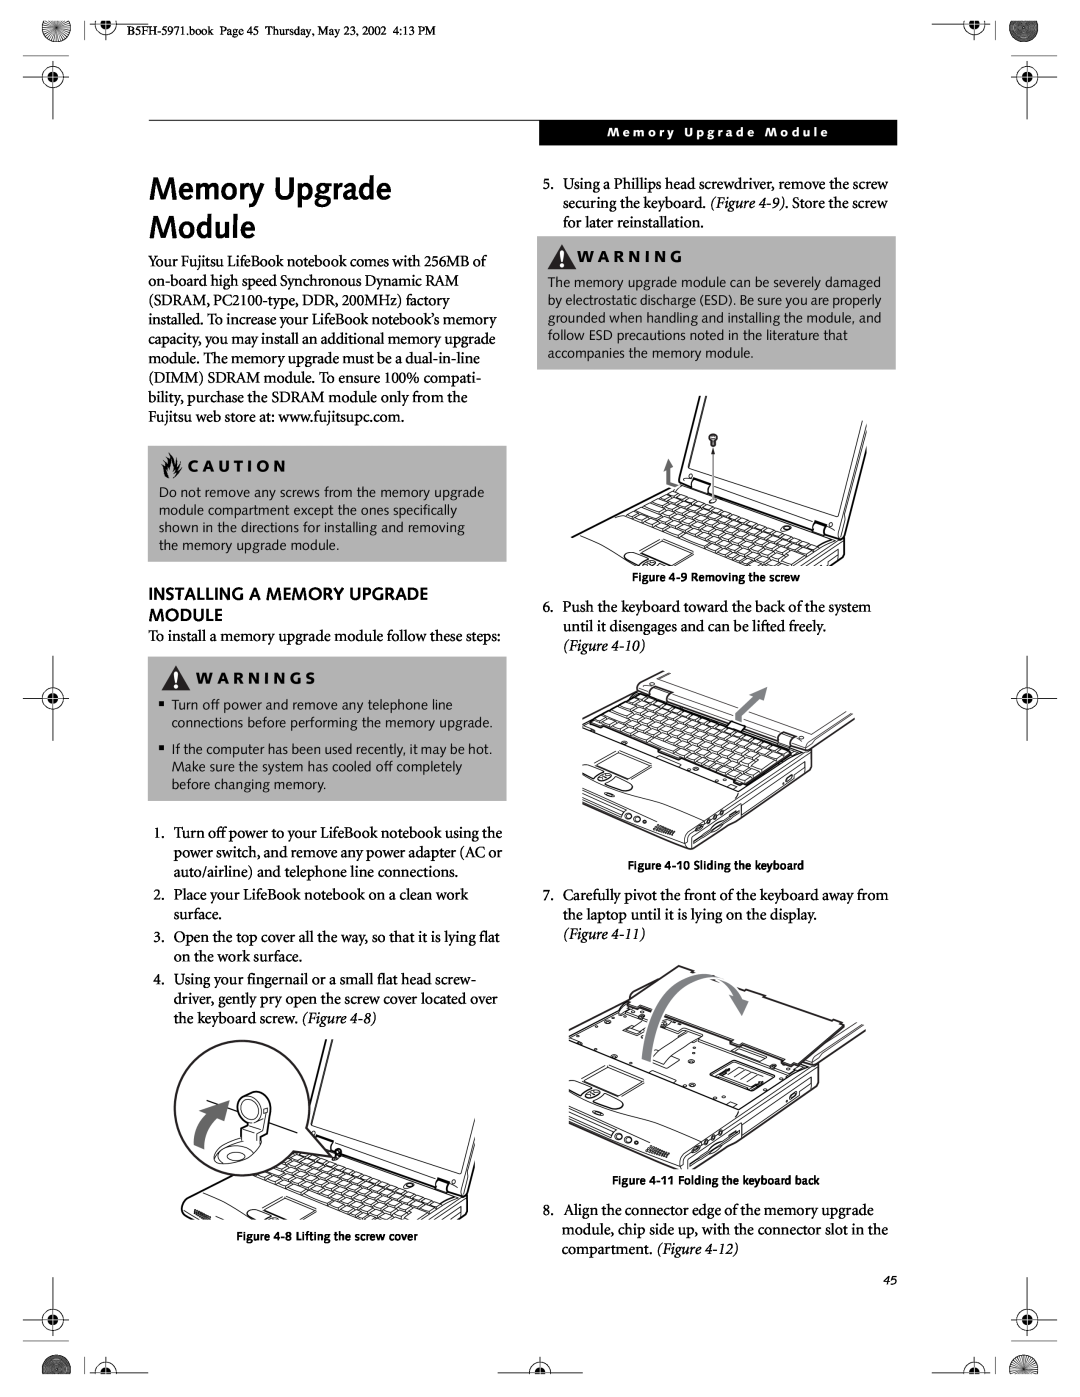 Fujitsu C2010, C2111 manual Installing A Memory Upgrade Module, C A U T I O N, W A R N I N G S 